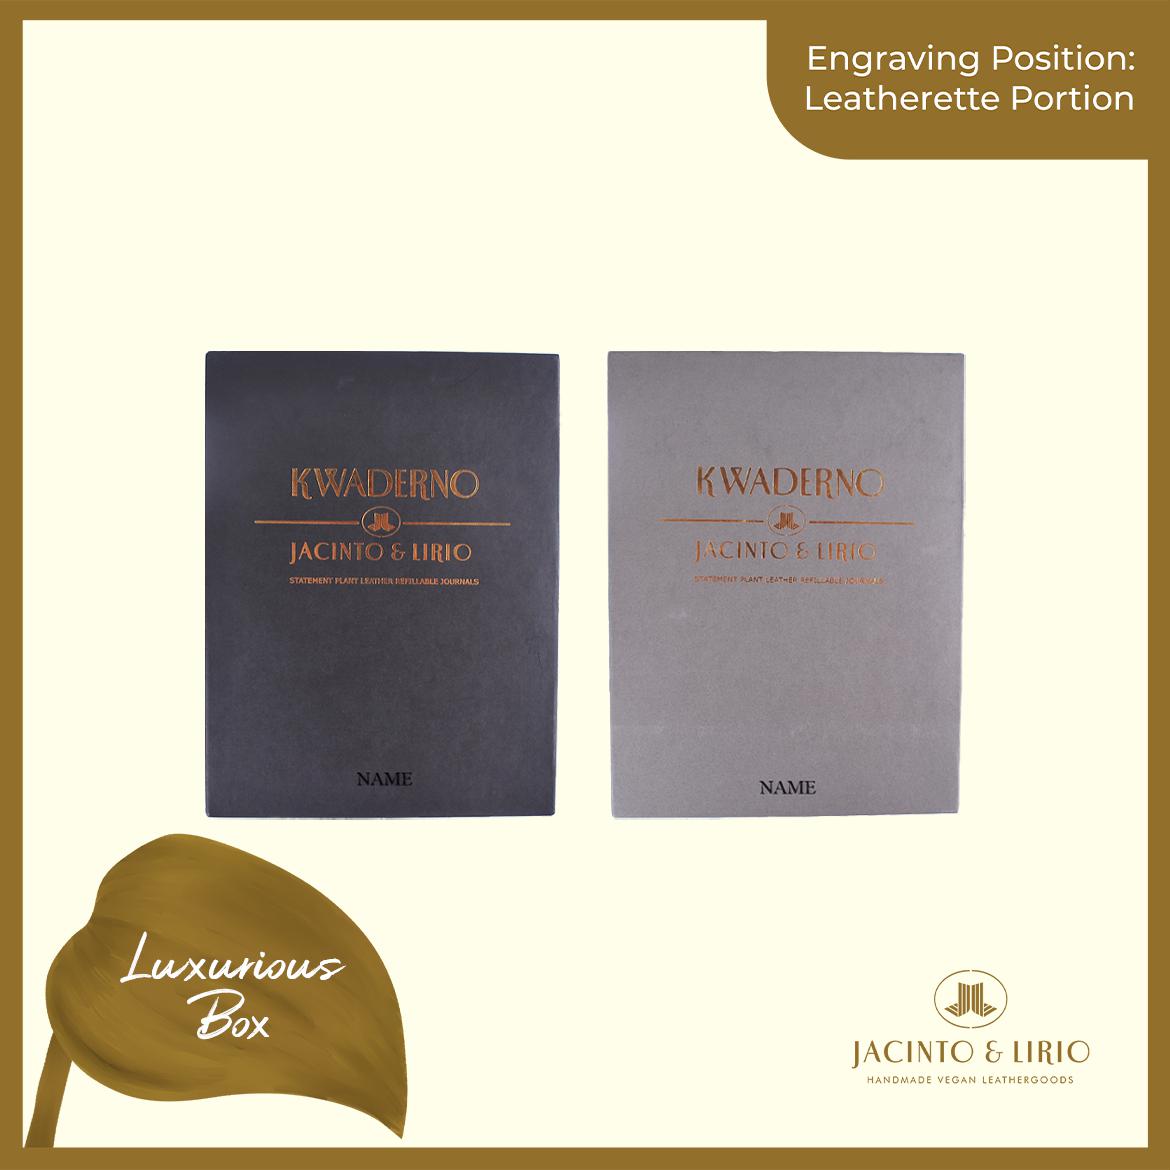 Name Engraving Personalization on Leatherette Portion - Jacinto & Lirio